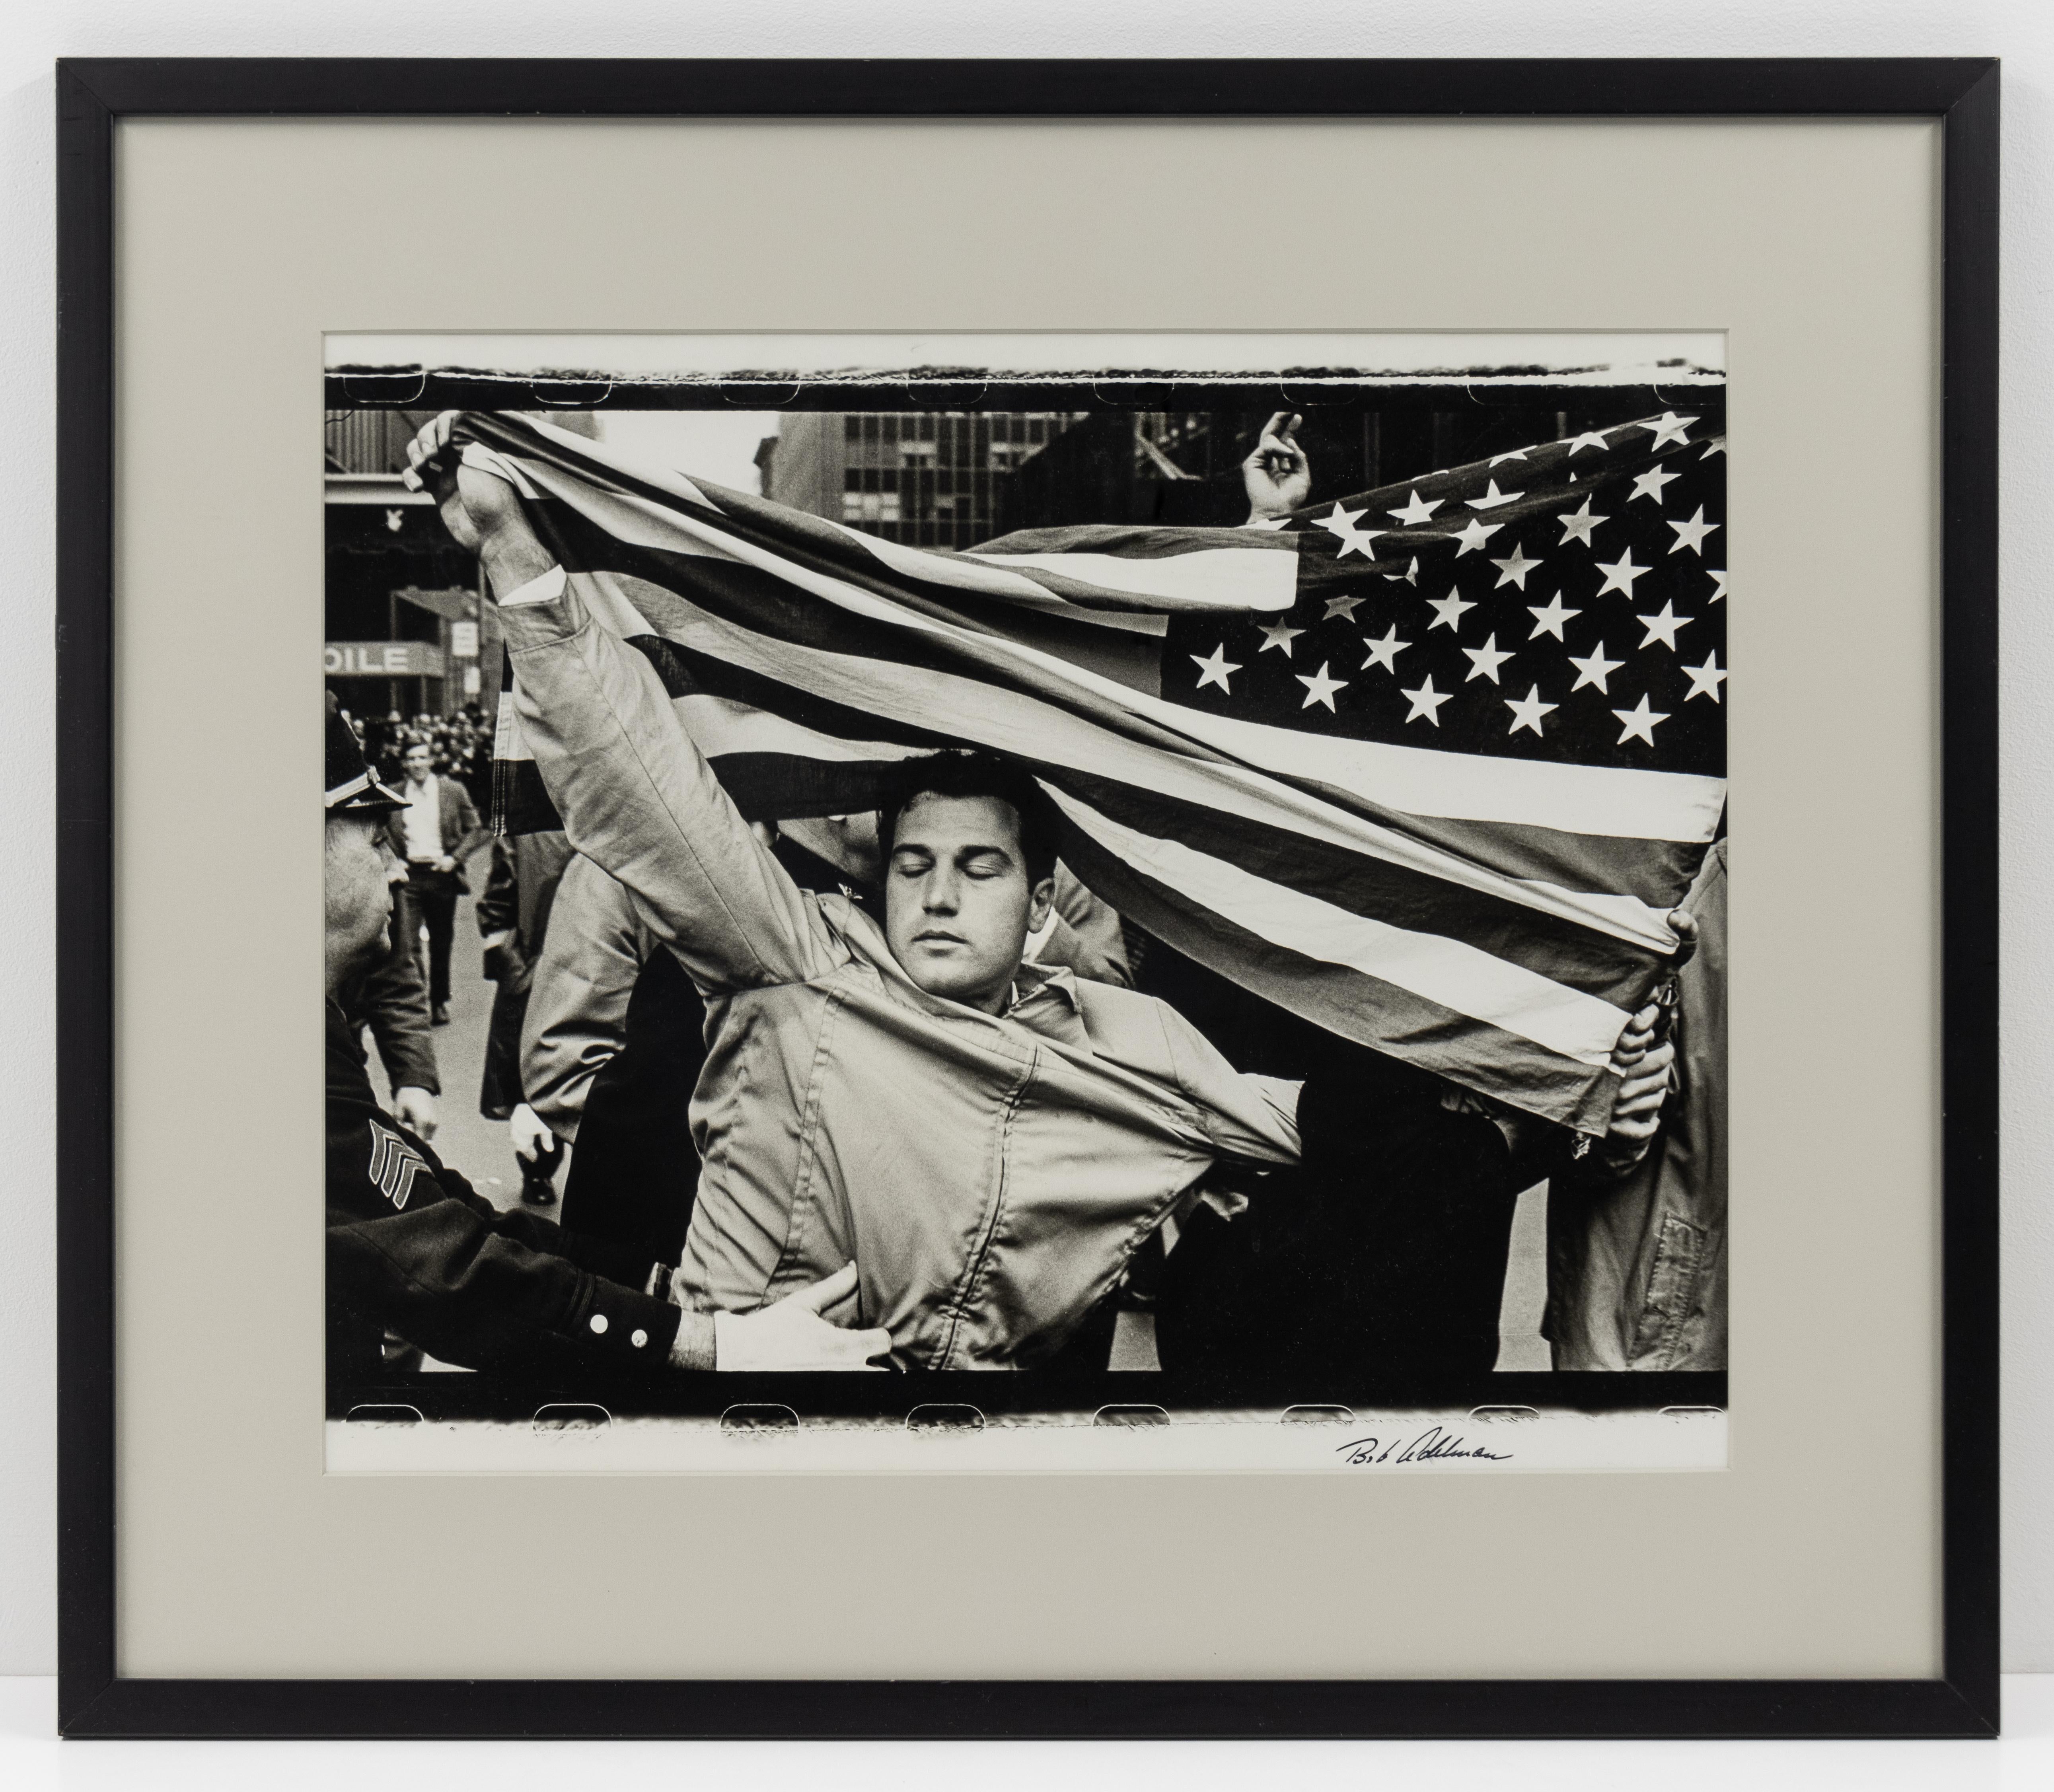 Pro-Vietnam War Demonstrator at Anti-war Demonstration in New York City. - Contemporary Photograph by Bob Adelman